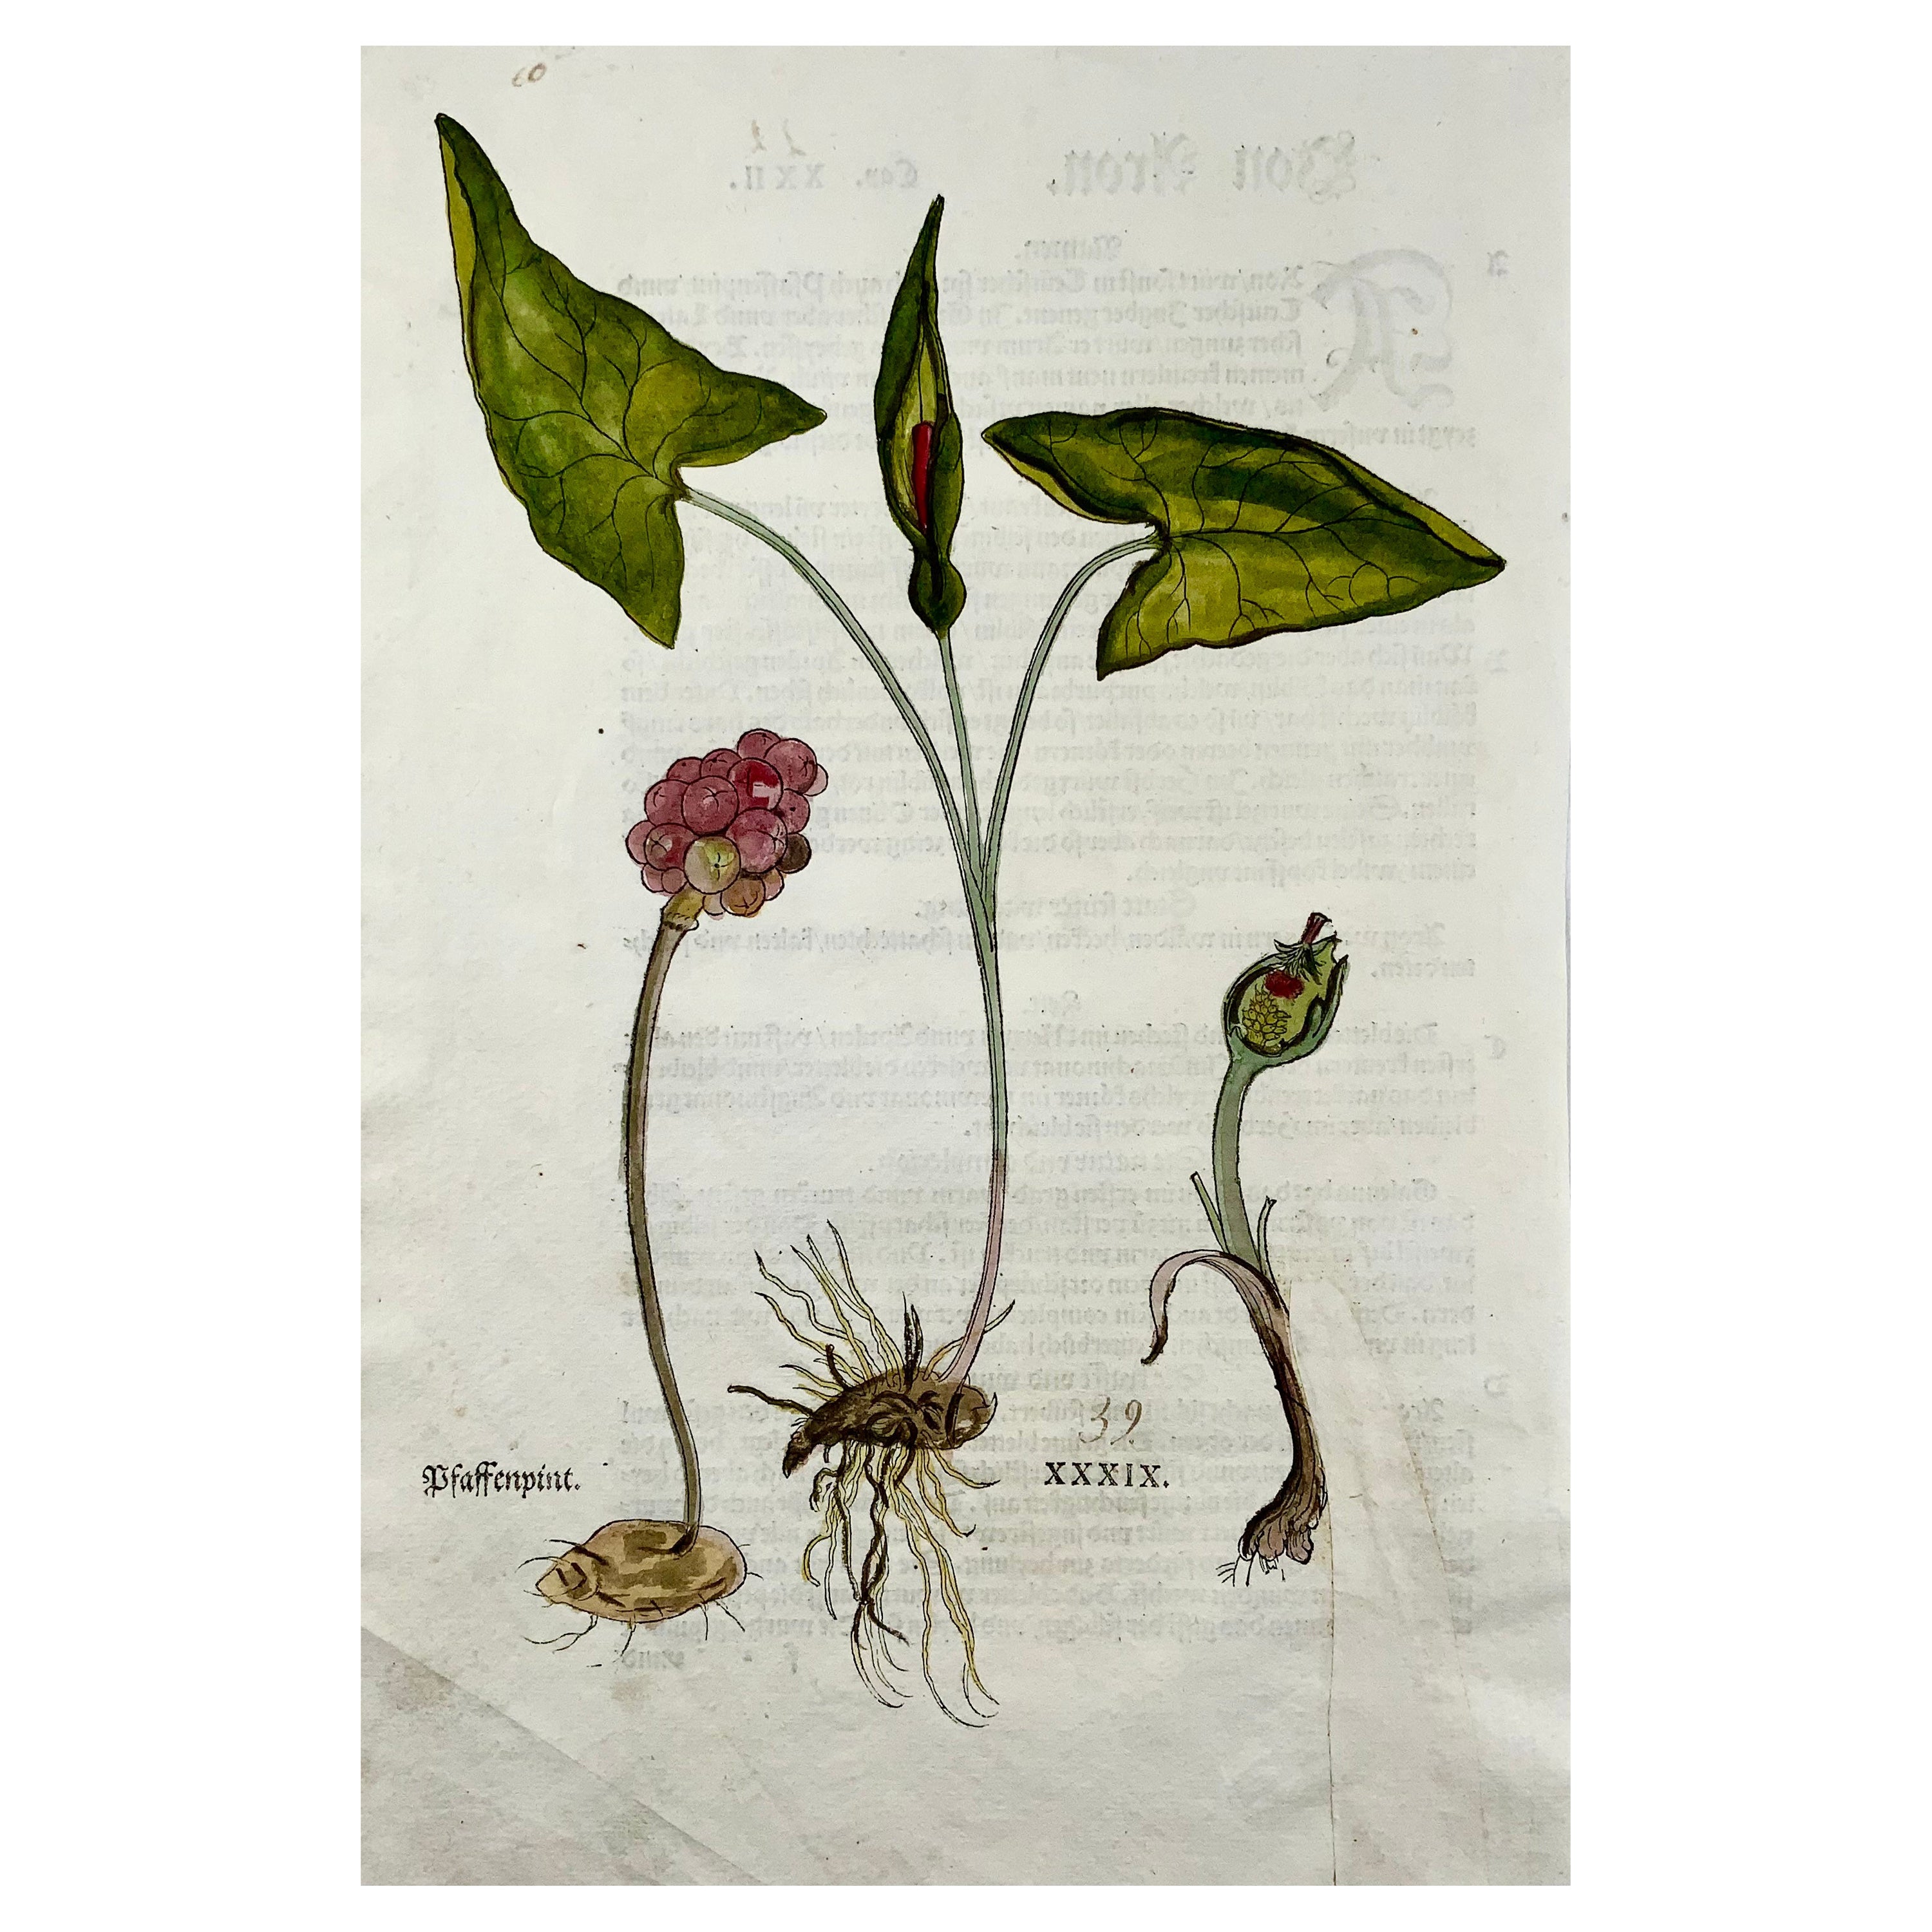 Kugelschreiber, Cuckoo-Pint, Folio-Holzschnitt, 1. Edn, Botanik